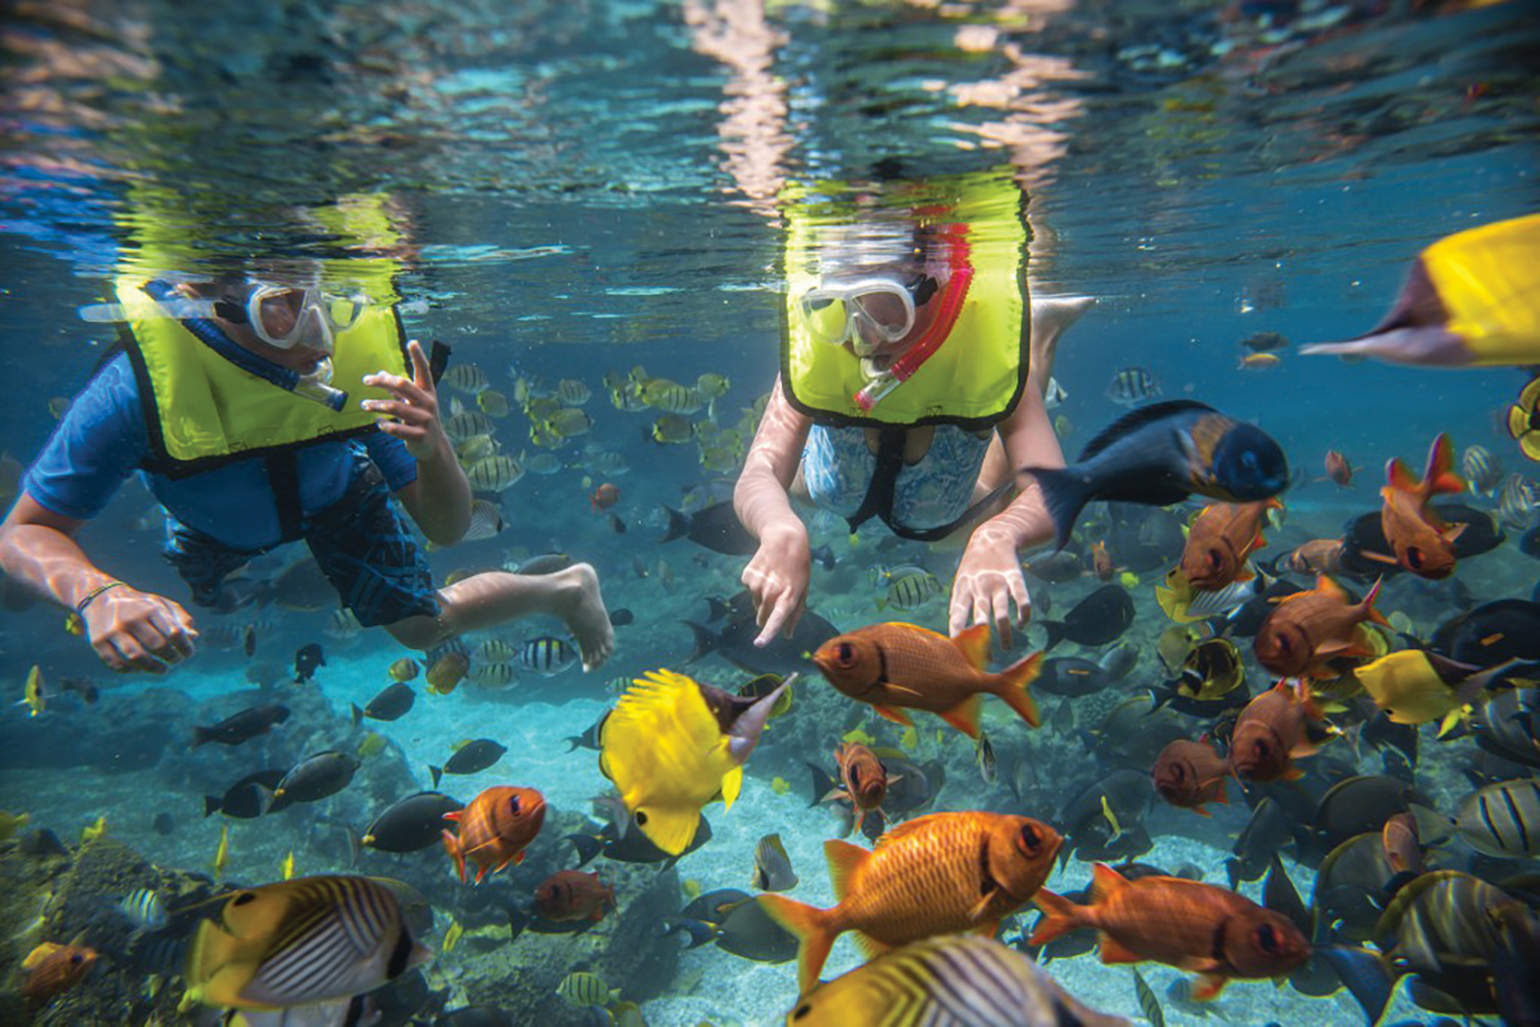 Travel Bucket List: Family Fun at Aulani, a Disney Resort & Spa in Oahu, Hawaii